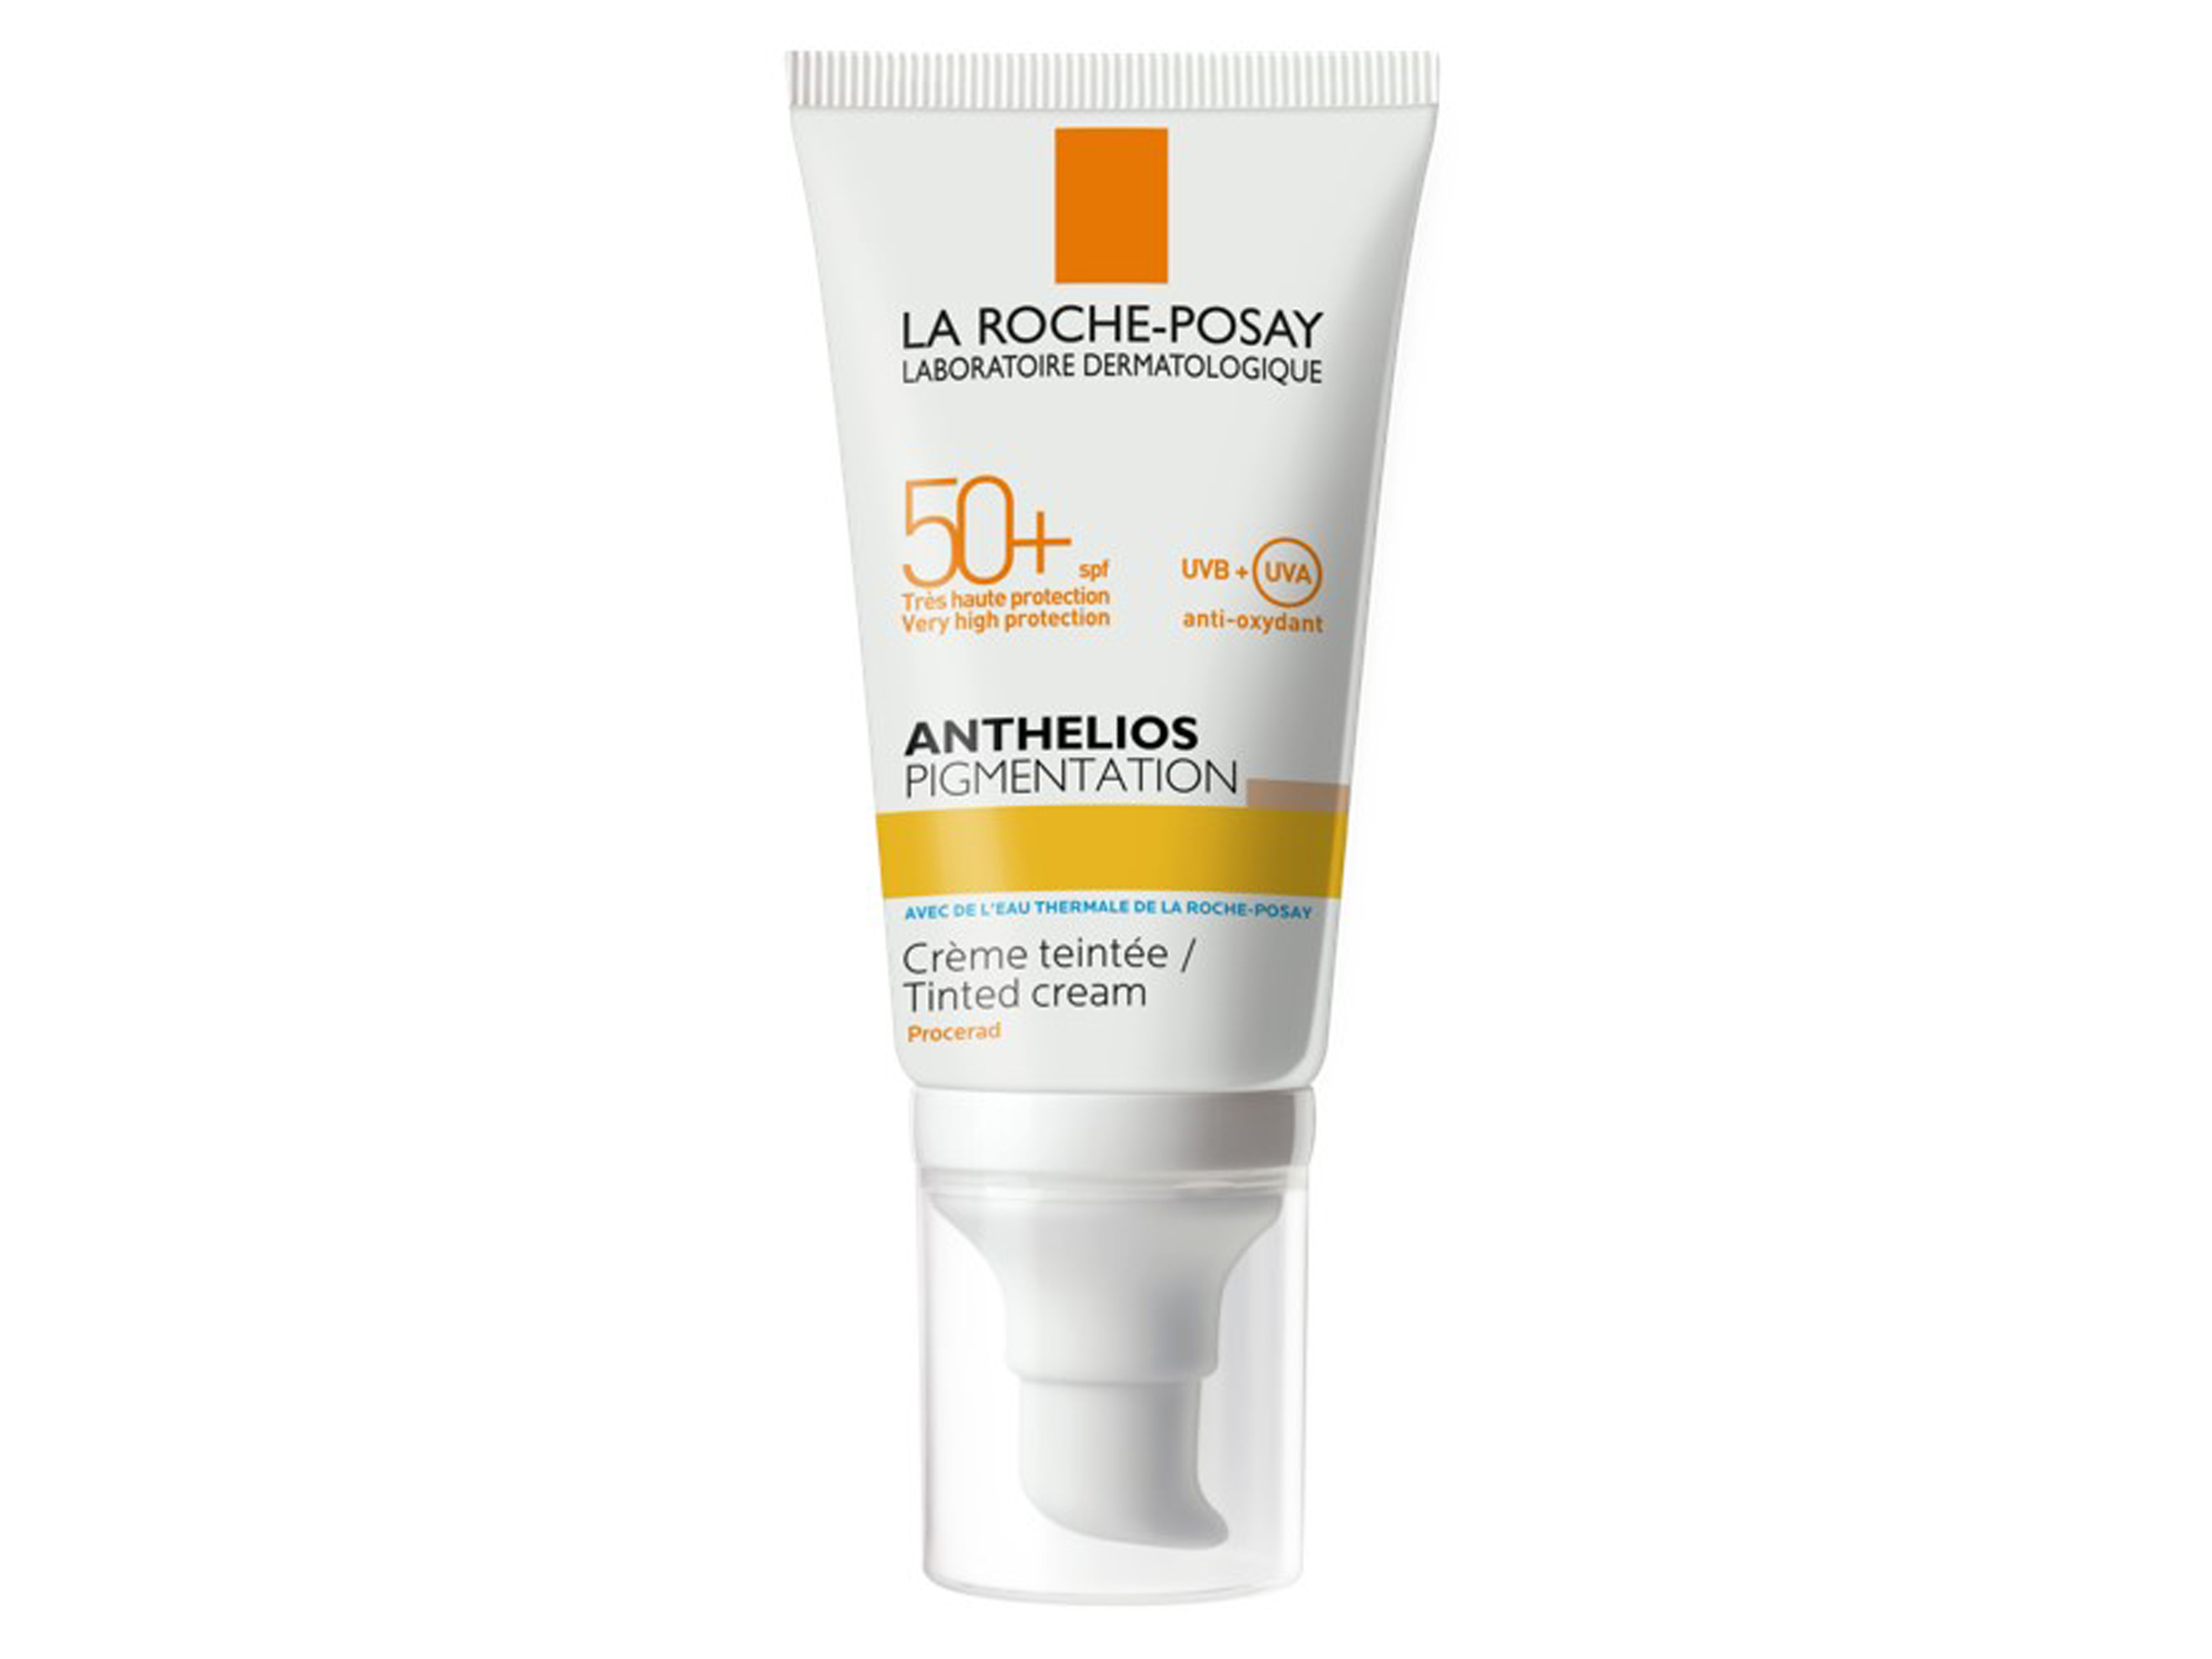 La Roche-Posay LaRoche-Posay Anthelios Pigmentation SPF50+, 50 ml